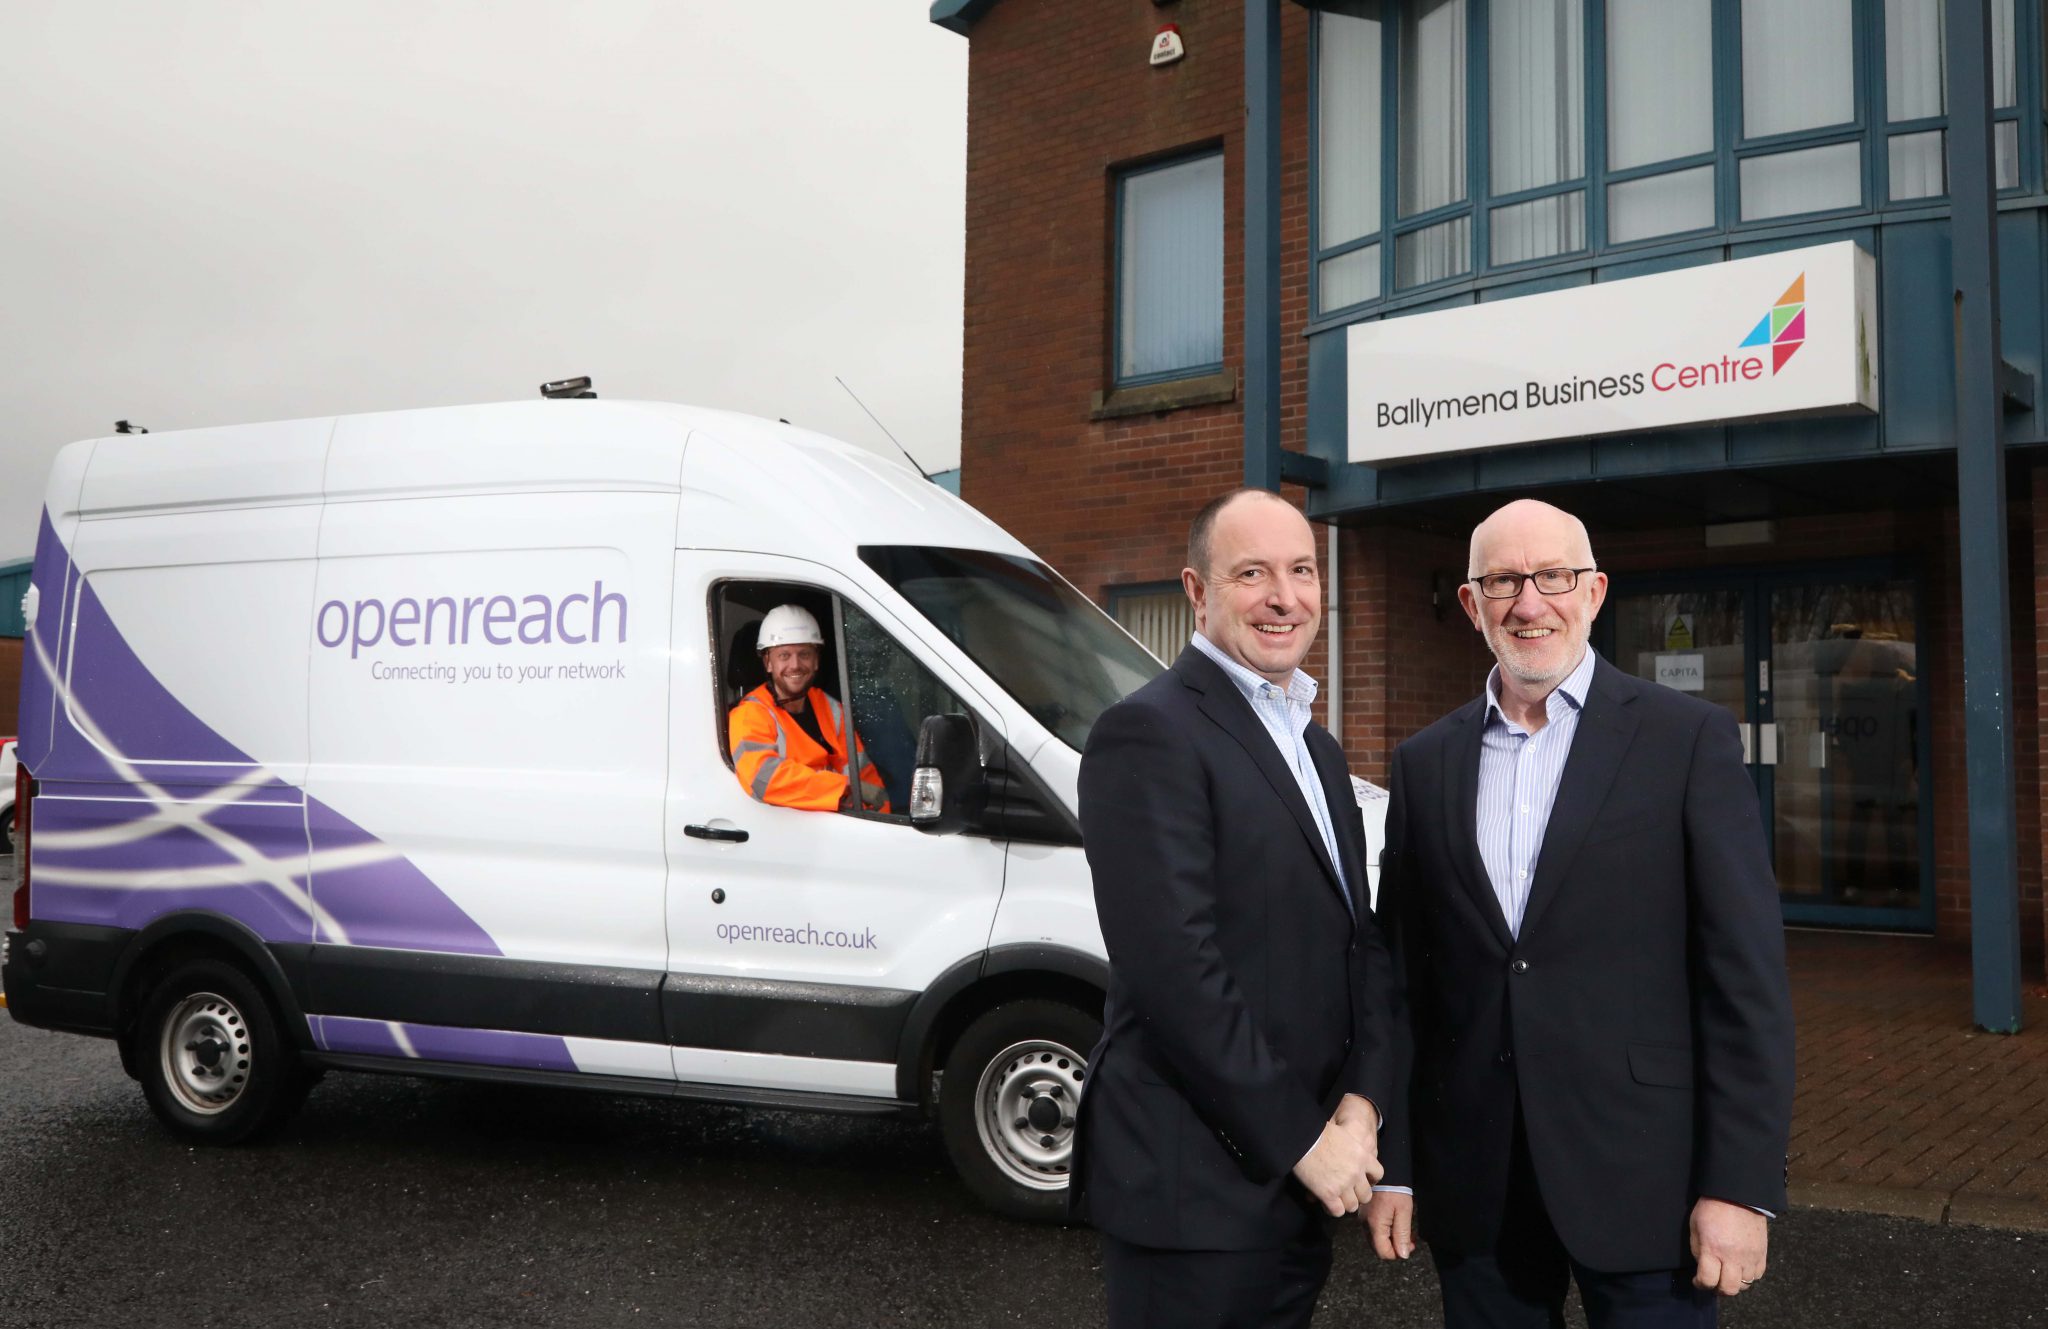 Community Fibre Partnership brings futureproof Broadband to Ballymena